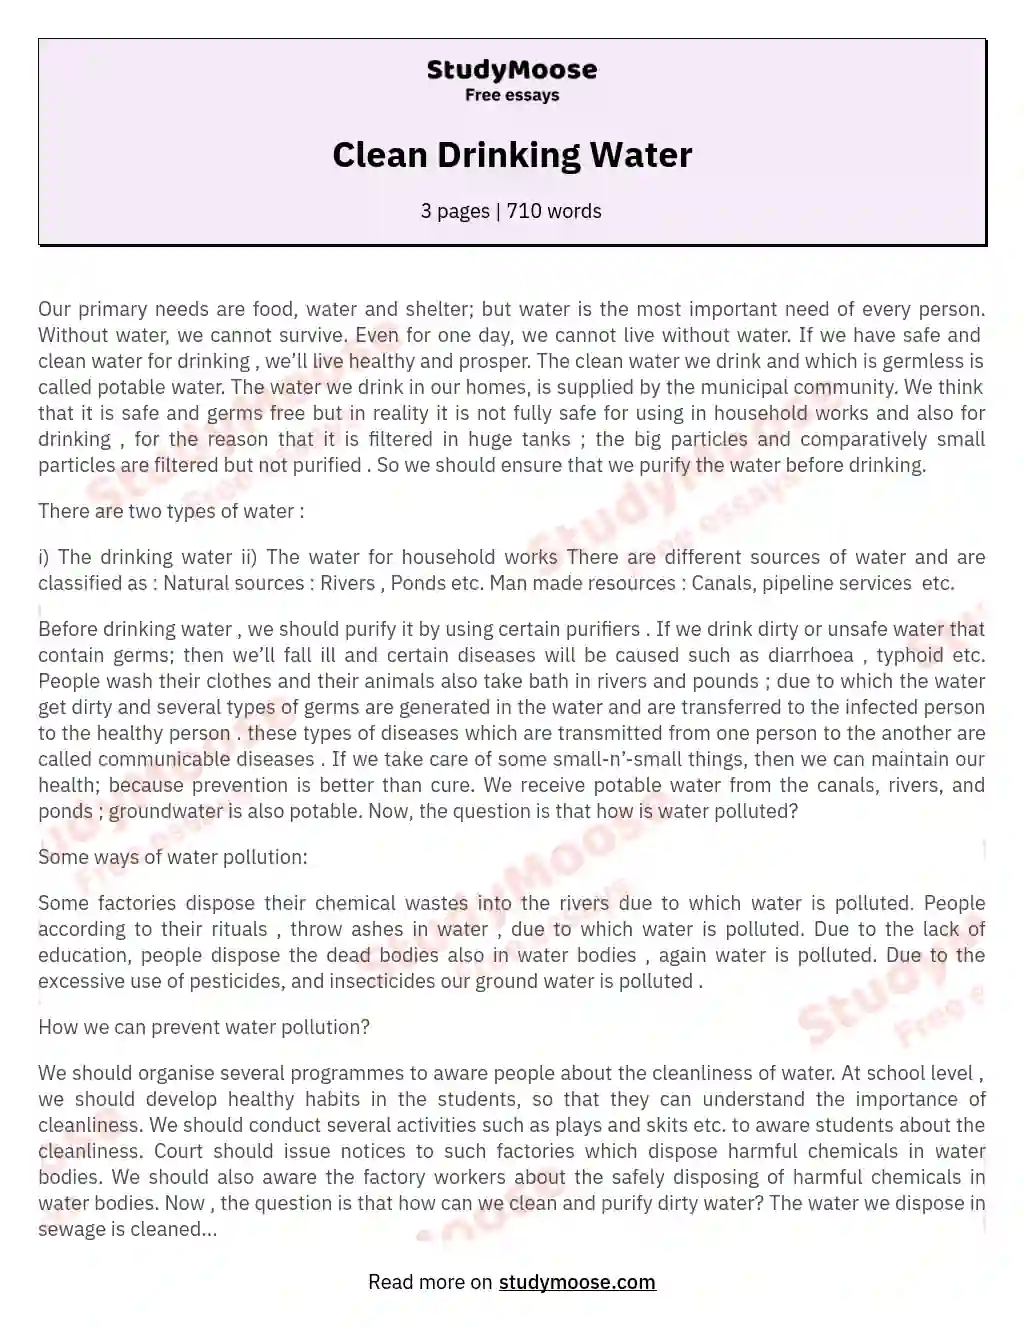 Clean Drinking Water essay